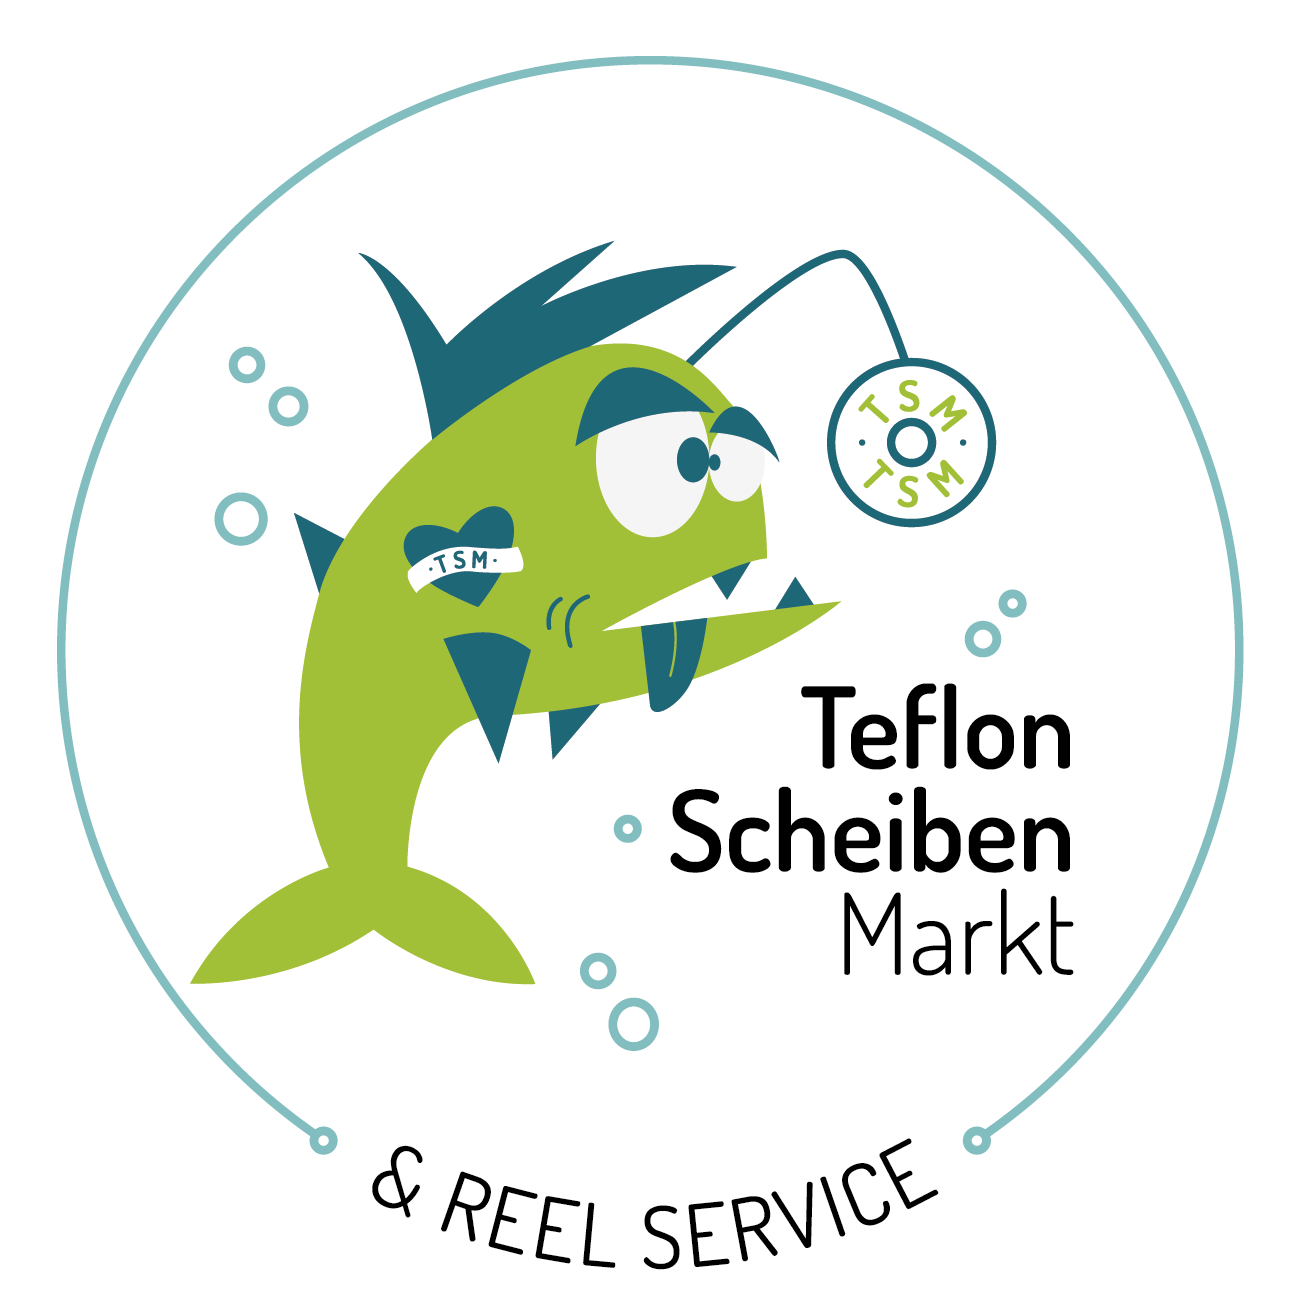 (c) Teflon-scheiben-markt.de